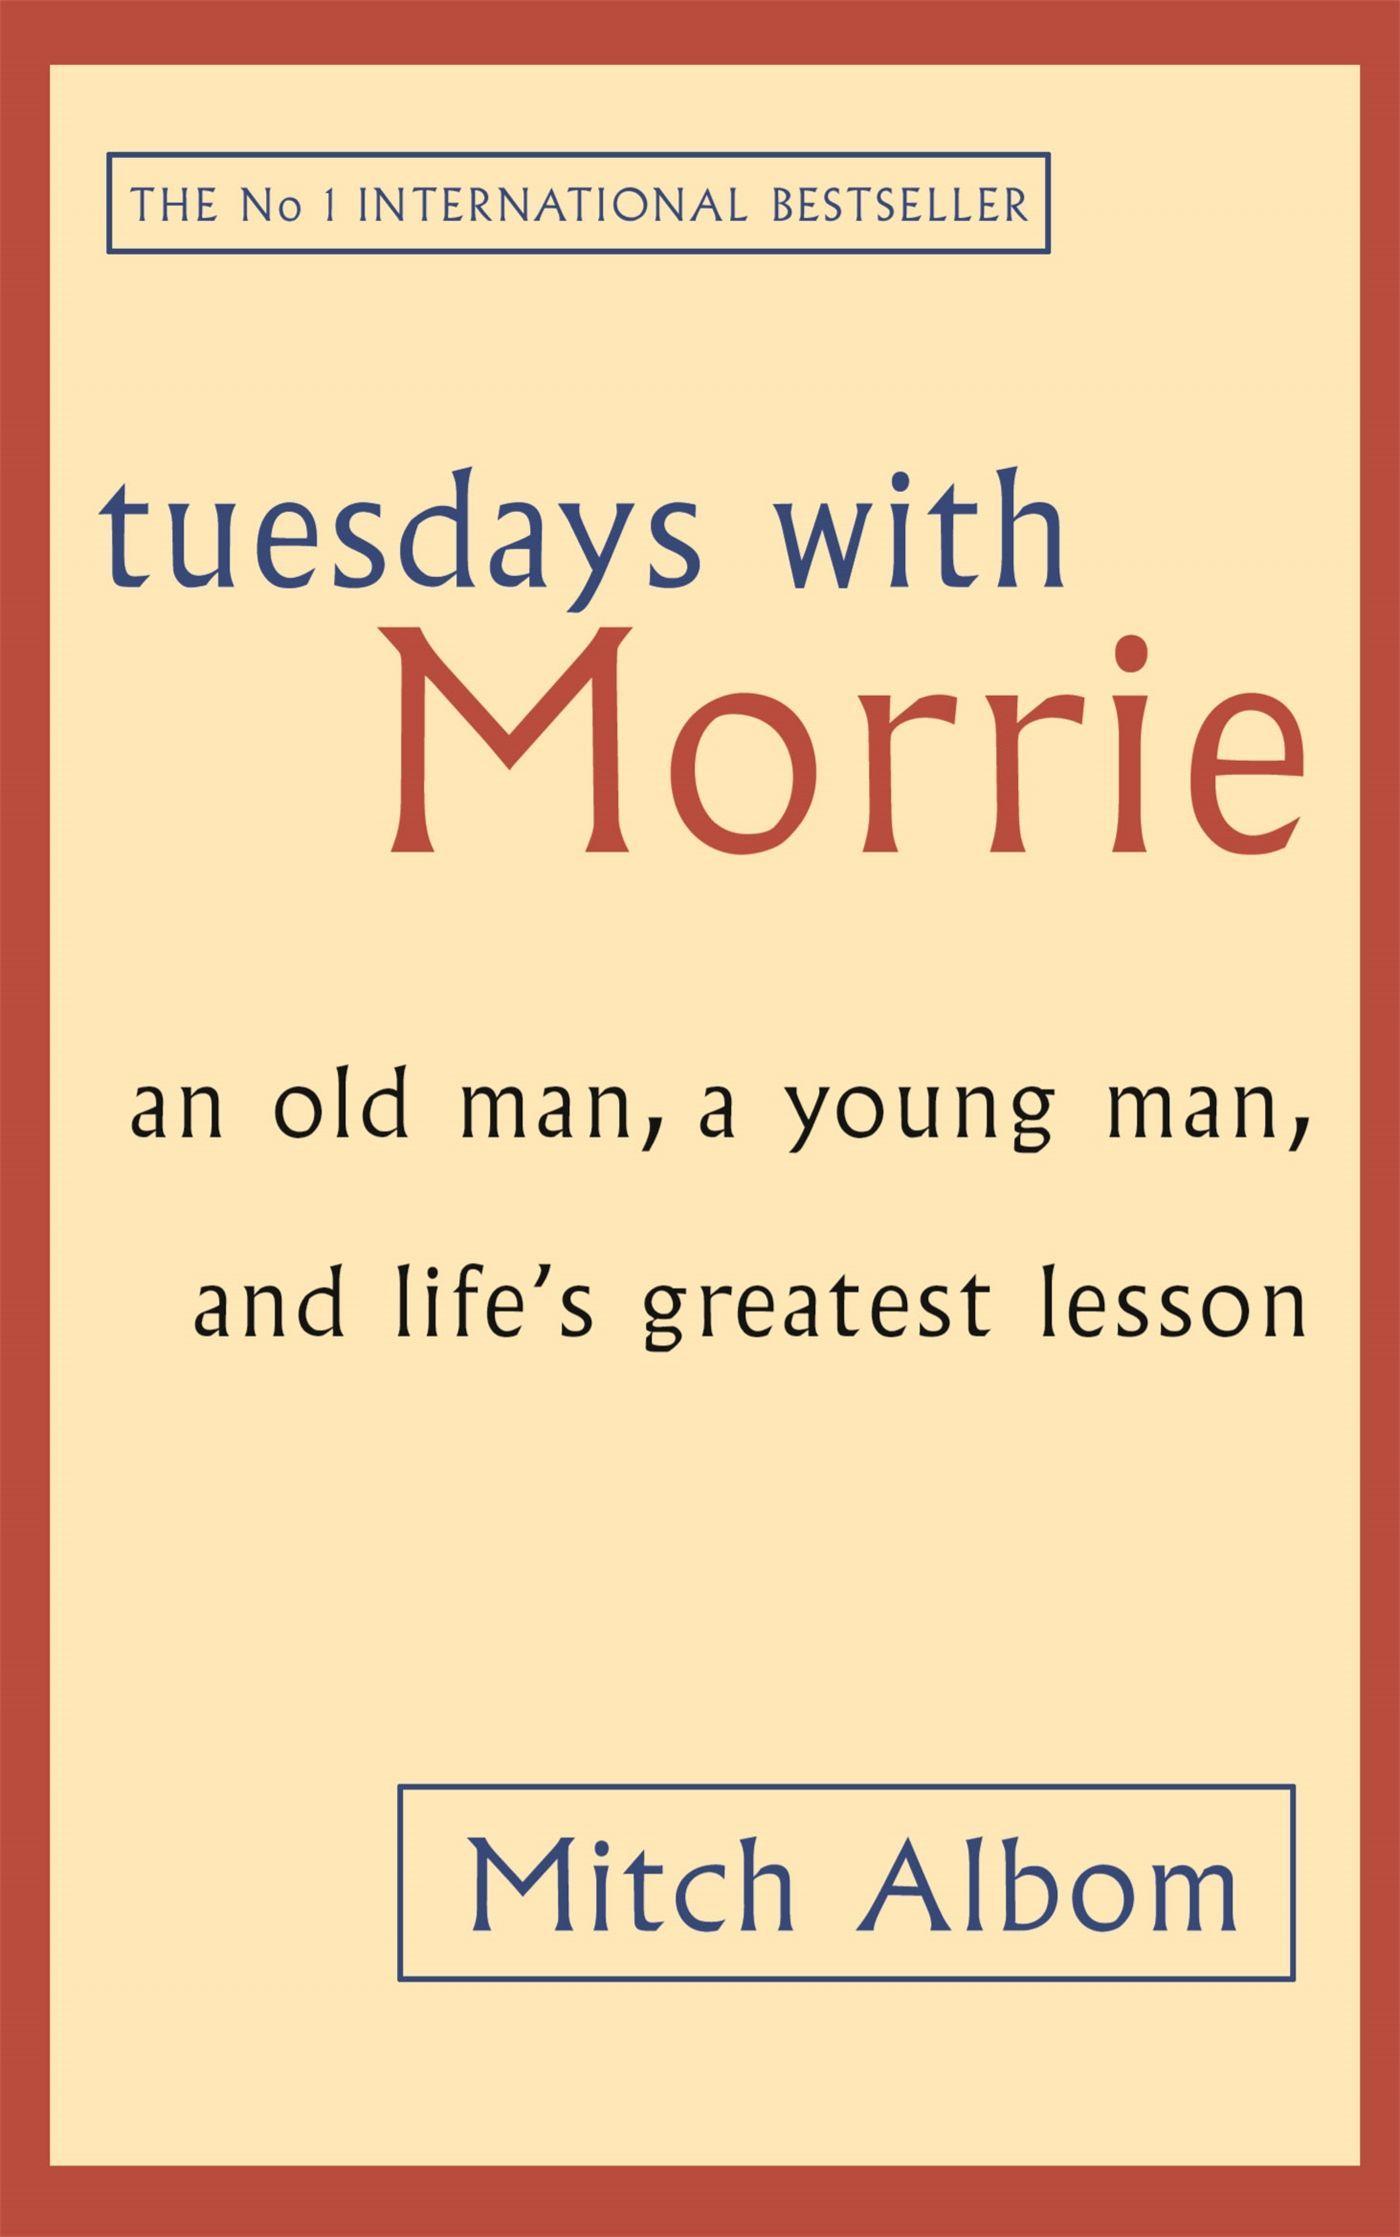 Tuesdays with Morrie | An old man, a young man, and life's greatest lesson | Mitch Albom | Taschenbuch | Kartoniert / Broschiert | Englisch | 2003 | Little, Brown Book Group | EAN 9780751529814 - Albom, Mitch